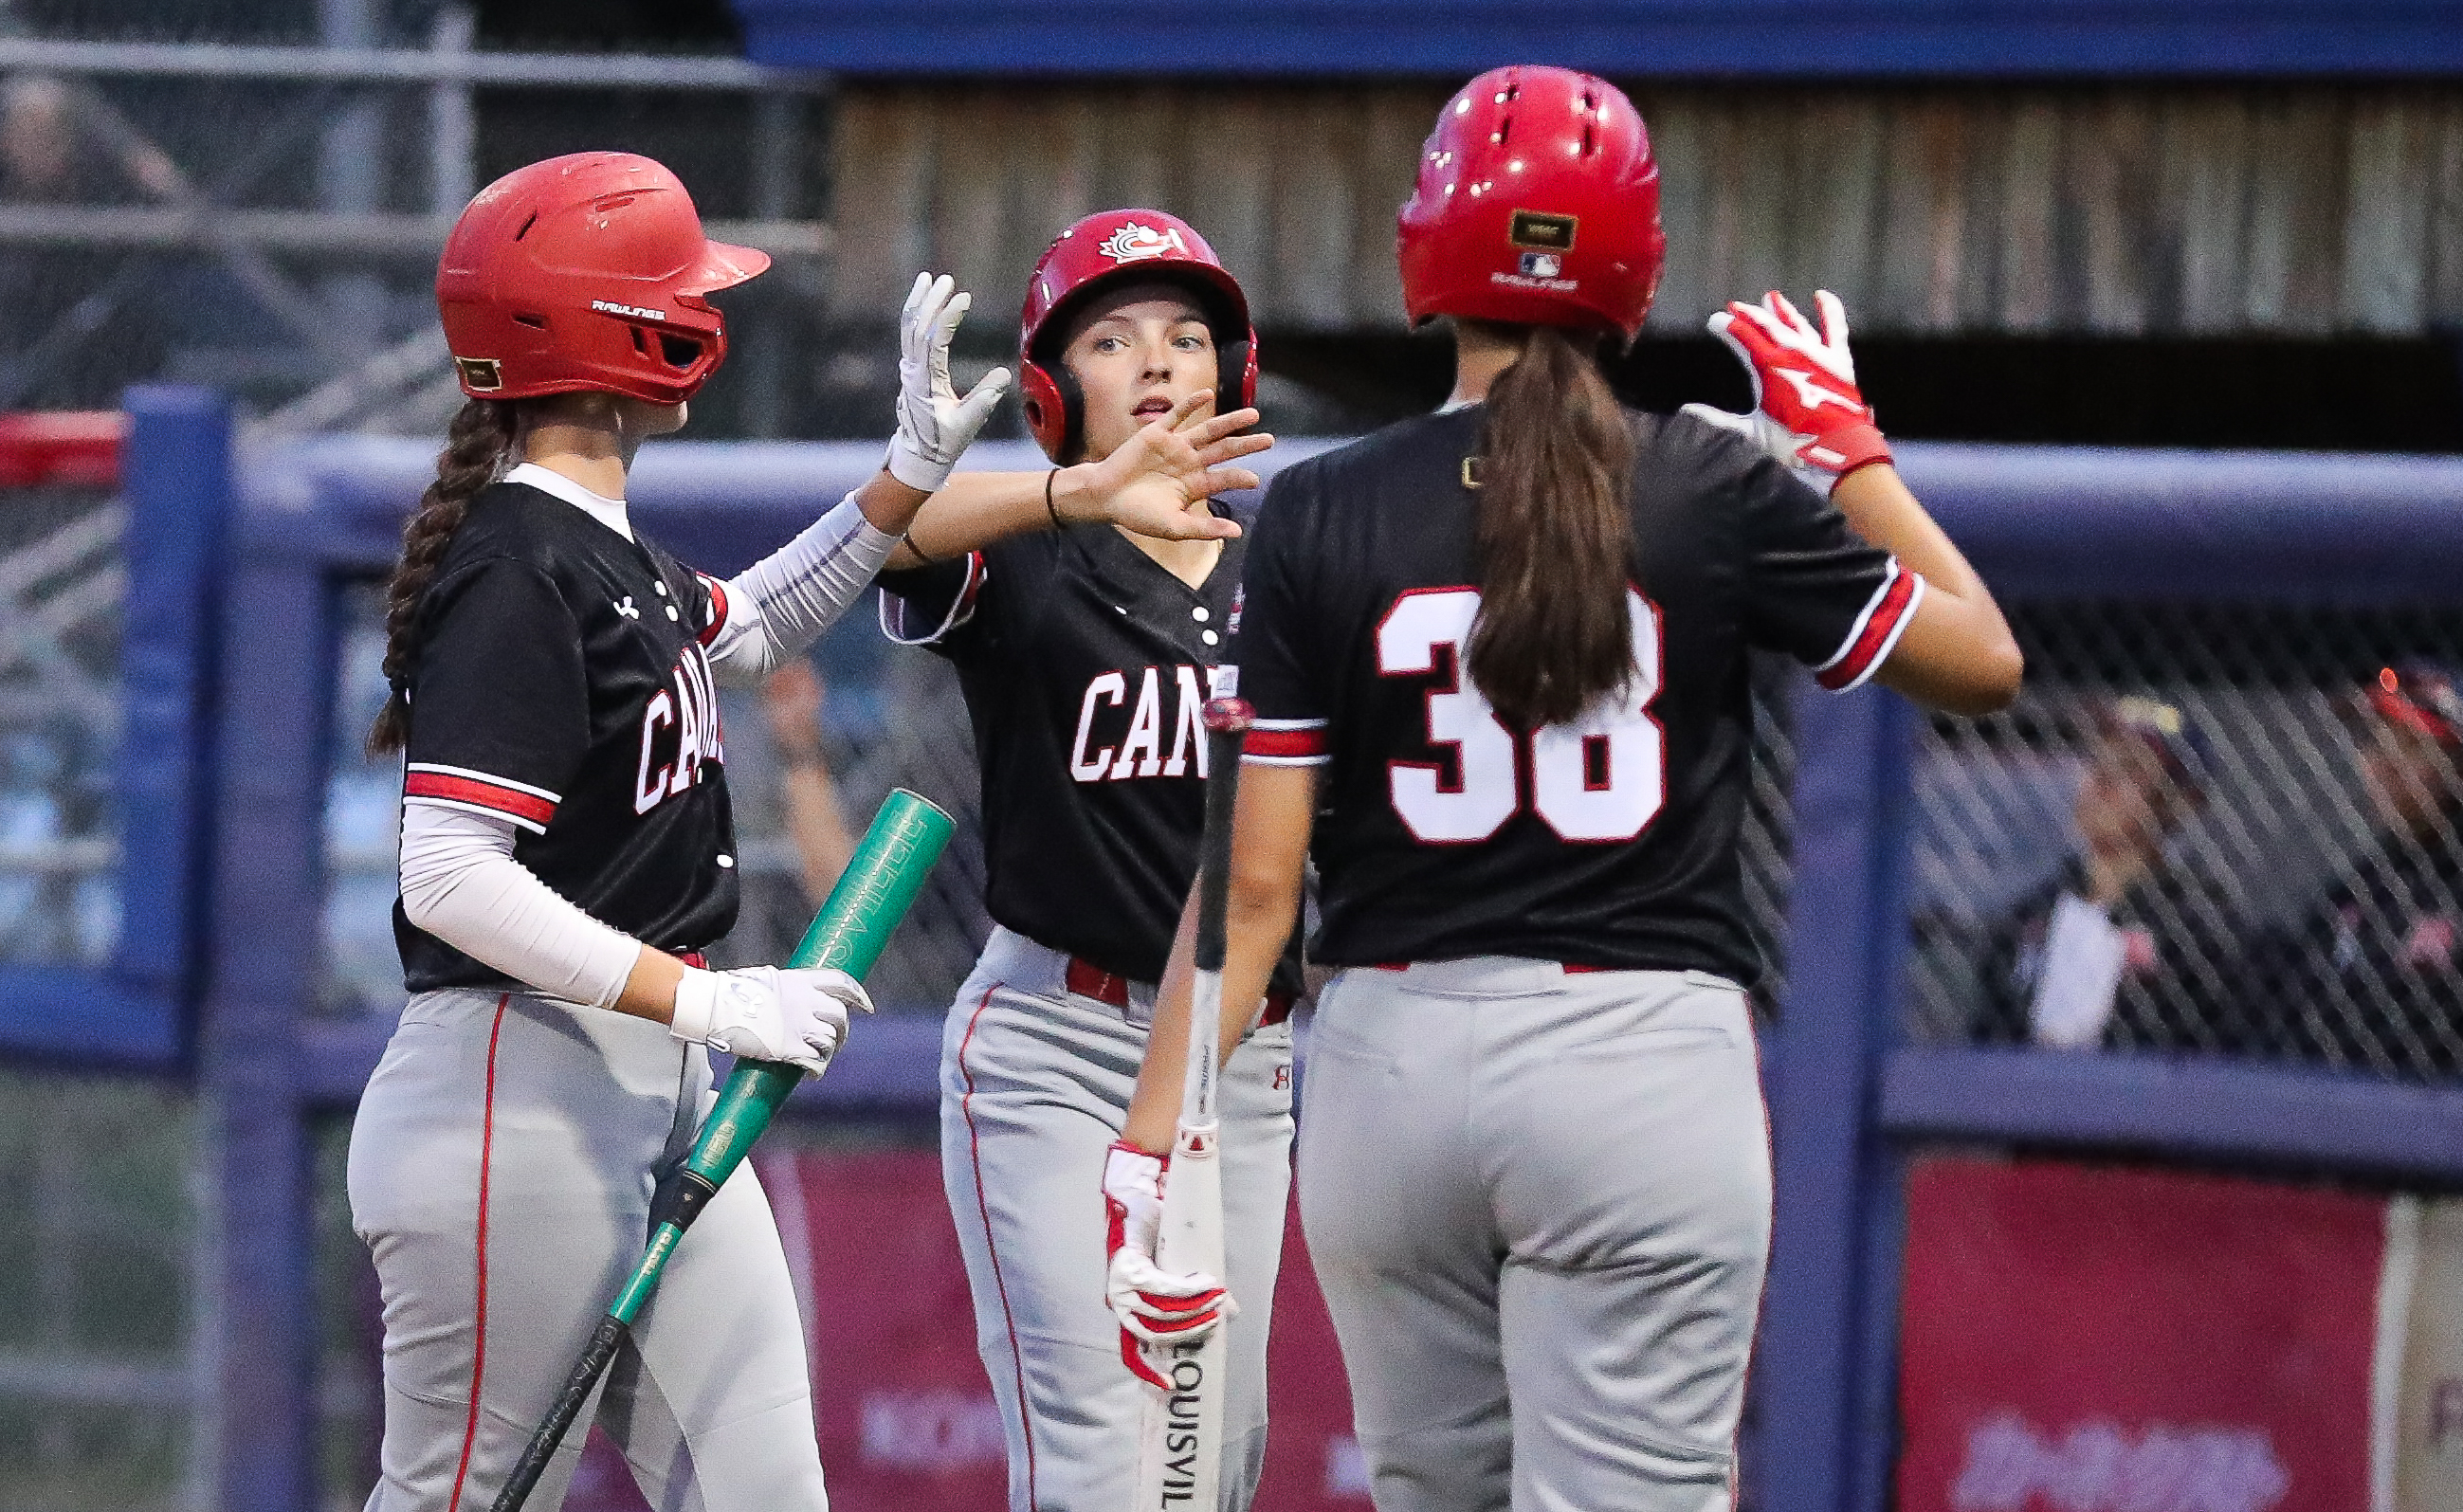 Coupe du monde féminine de baseball: Le Canada défait Hong Kong